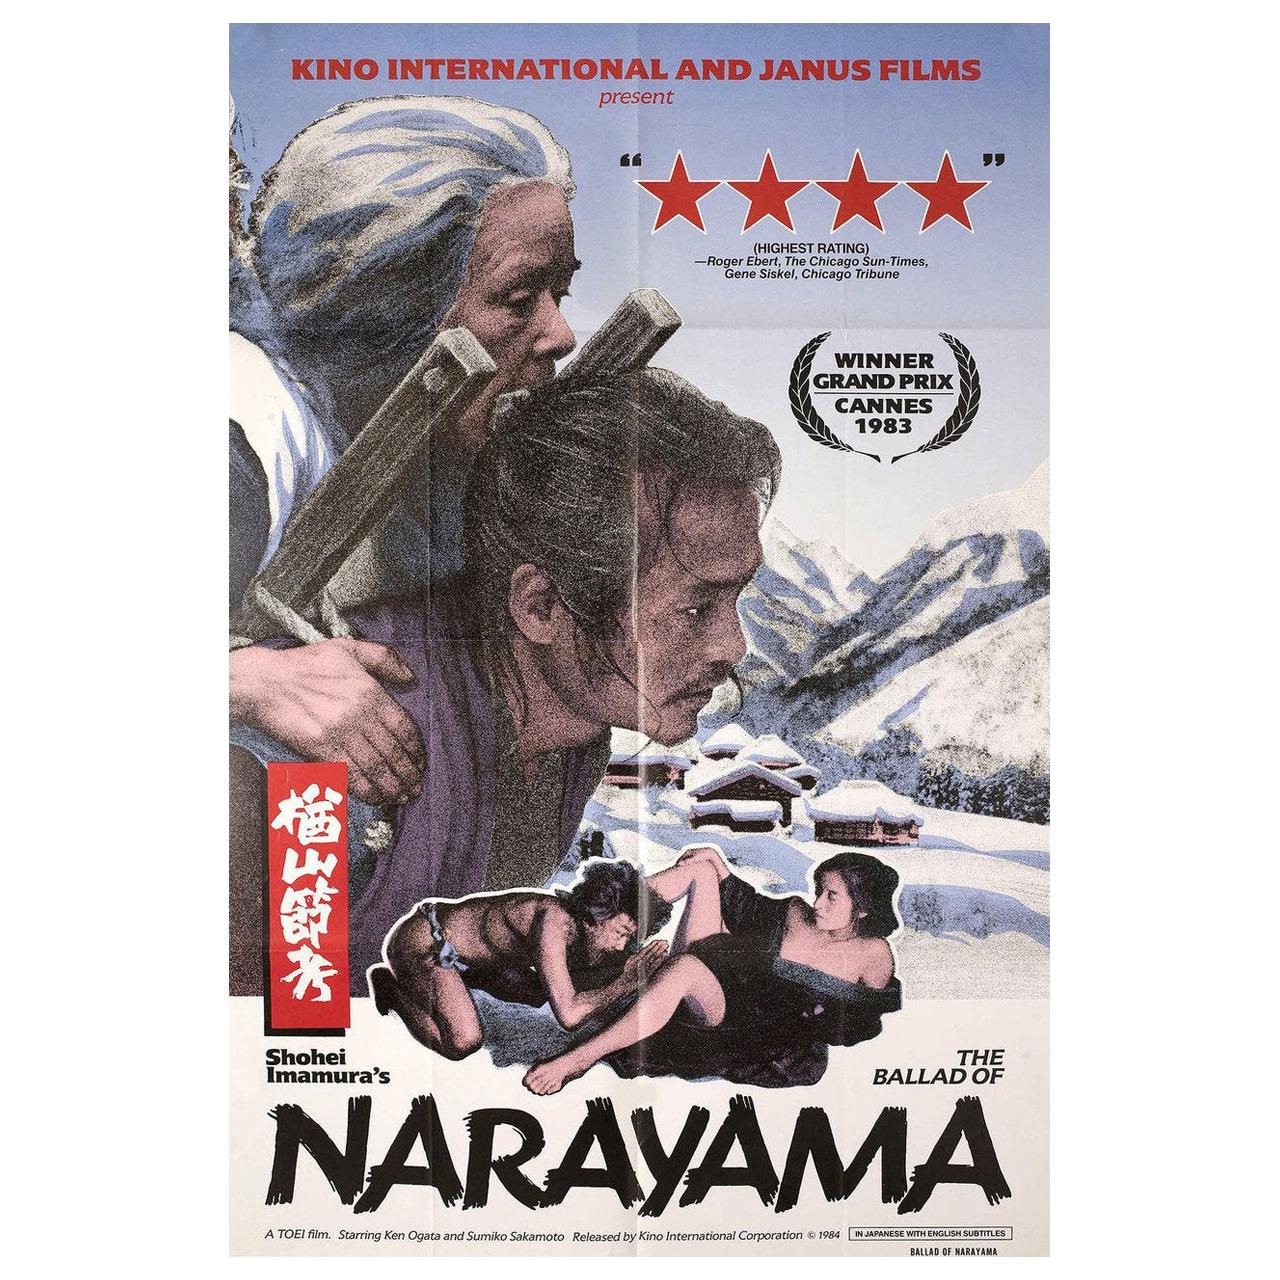 "The Ballad of Narayama" 1984 U.S. One Sheet Film Poster